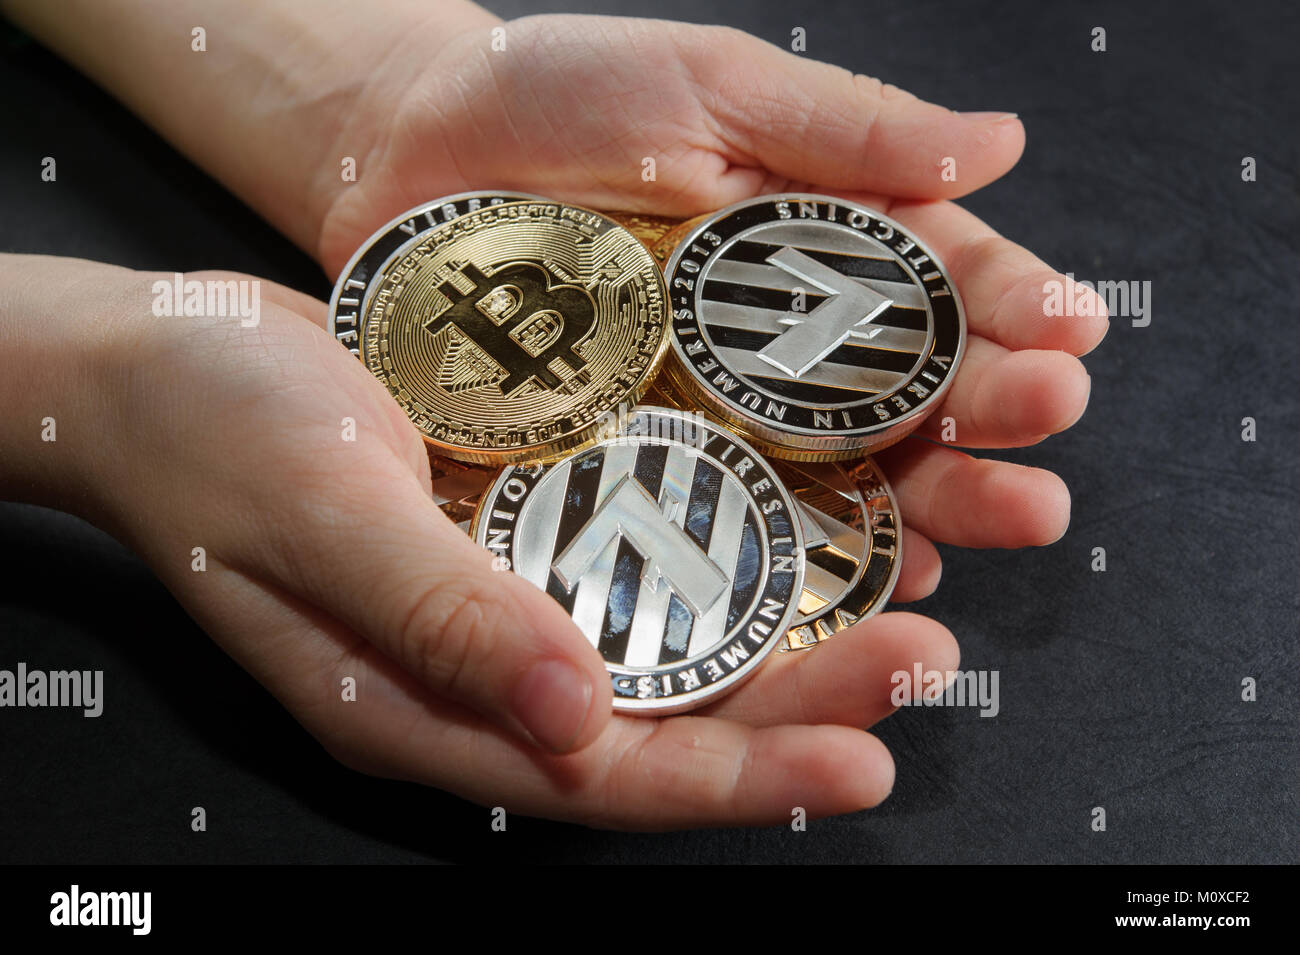 Bracci piena di monete cryptocurrency. Argento e litecoins golden bitcoins. Foto Stock